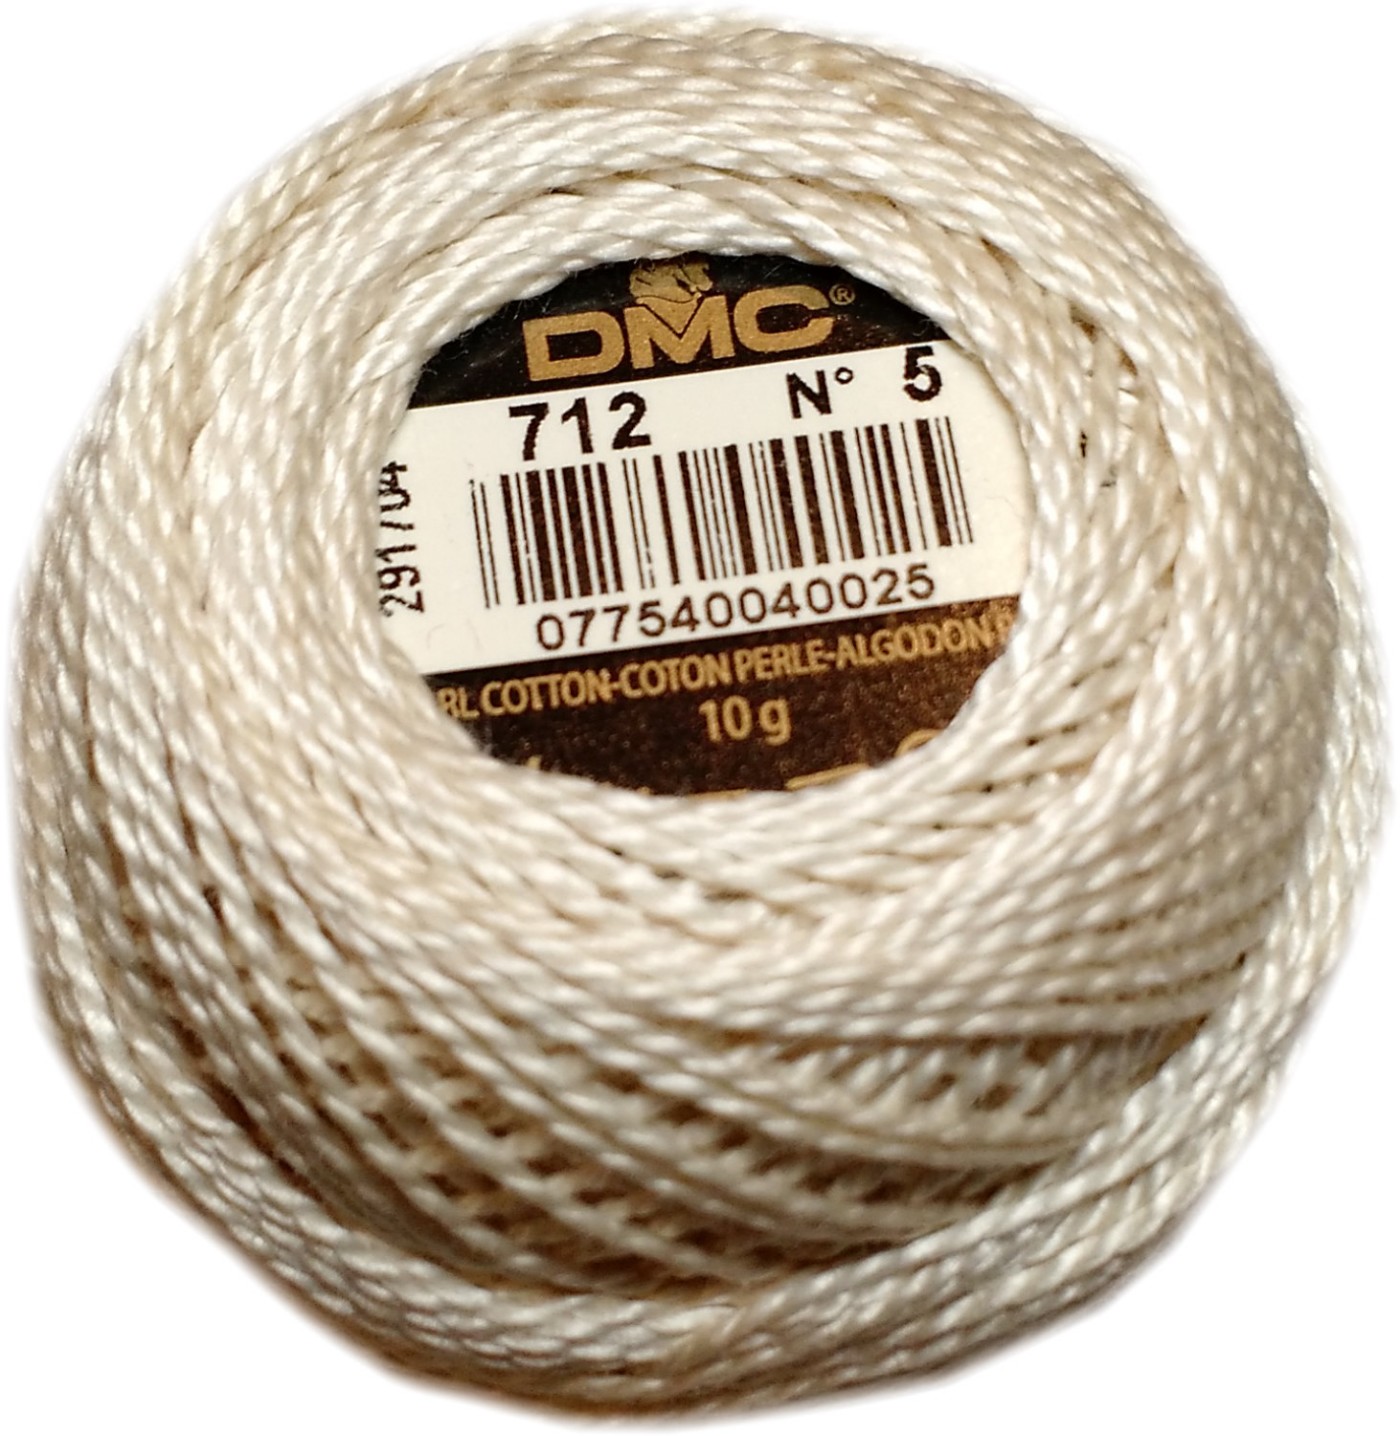 DMC Cotton Perle Black 116 / 310 / 5 (thick thread) - AMAZING CRAFT